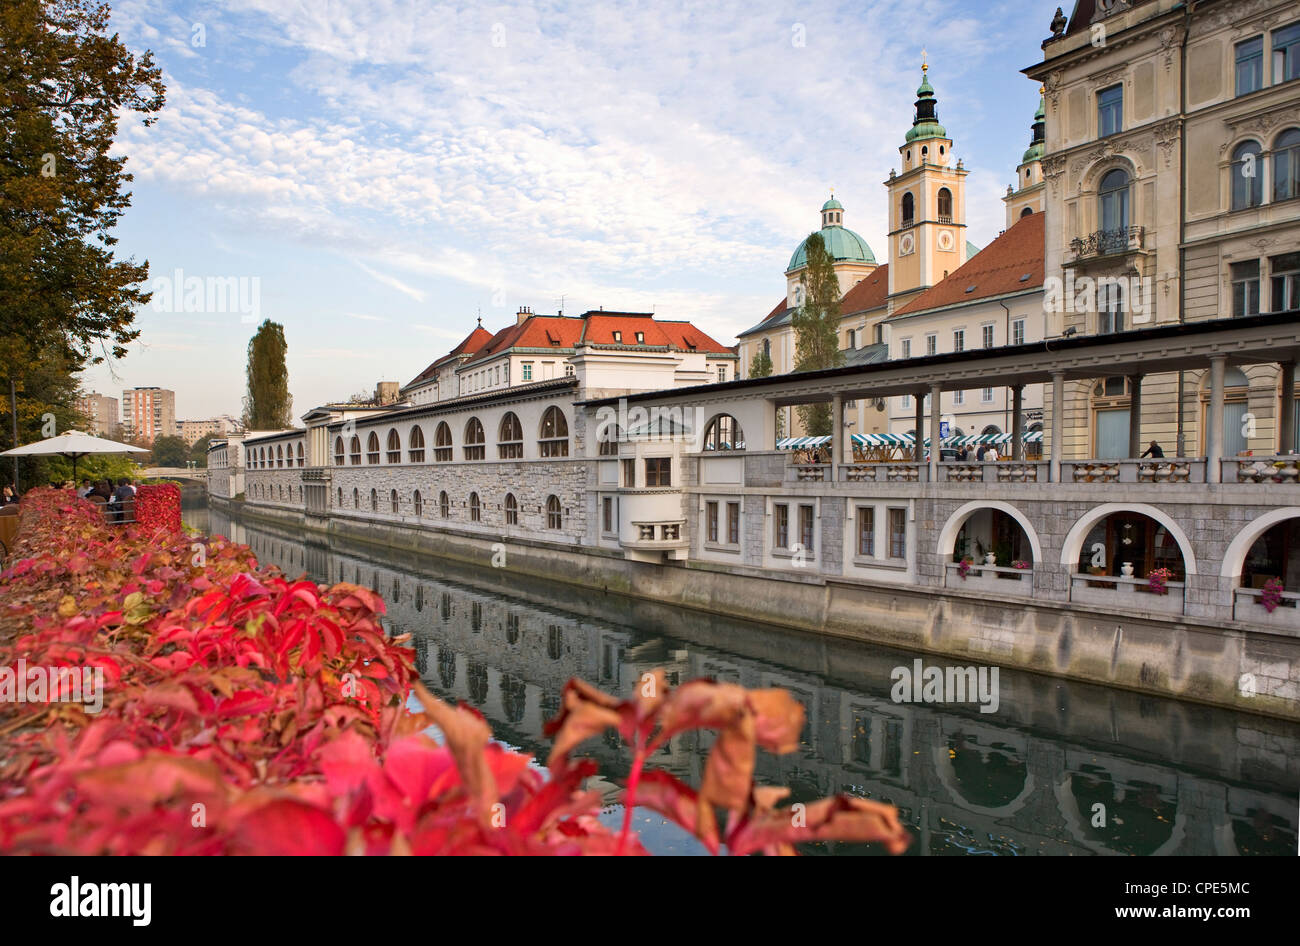 Riverside market halls and the Cathedral of St. Nicholas on the Ljubljanica River, Ljubljana, Slovenia, Europe Stock Photo